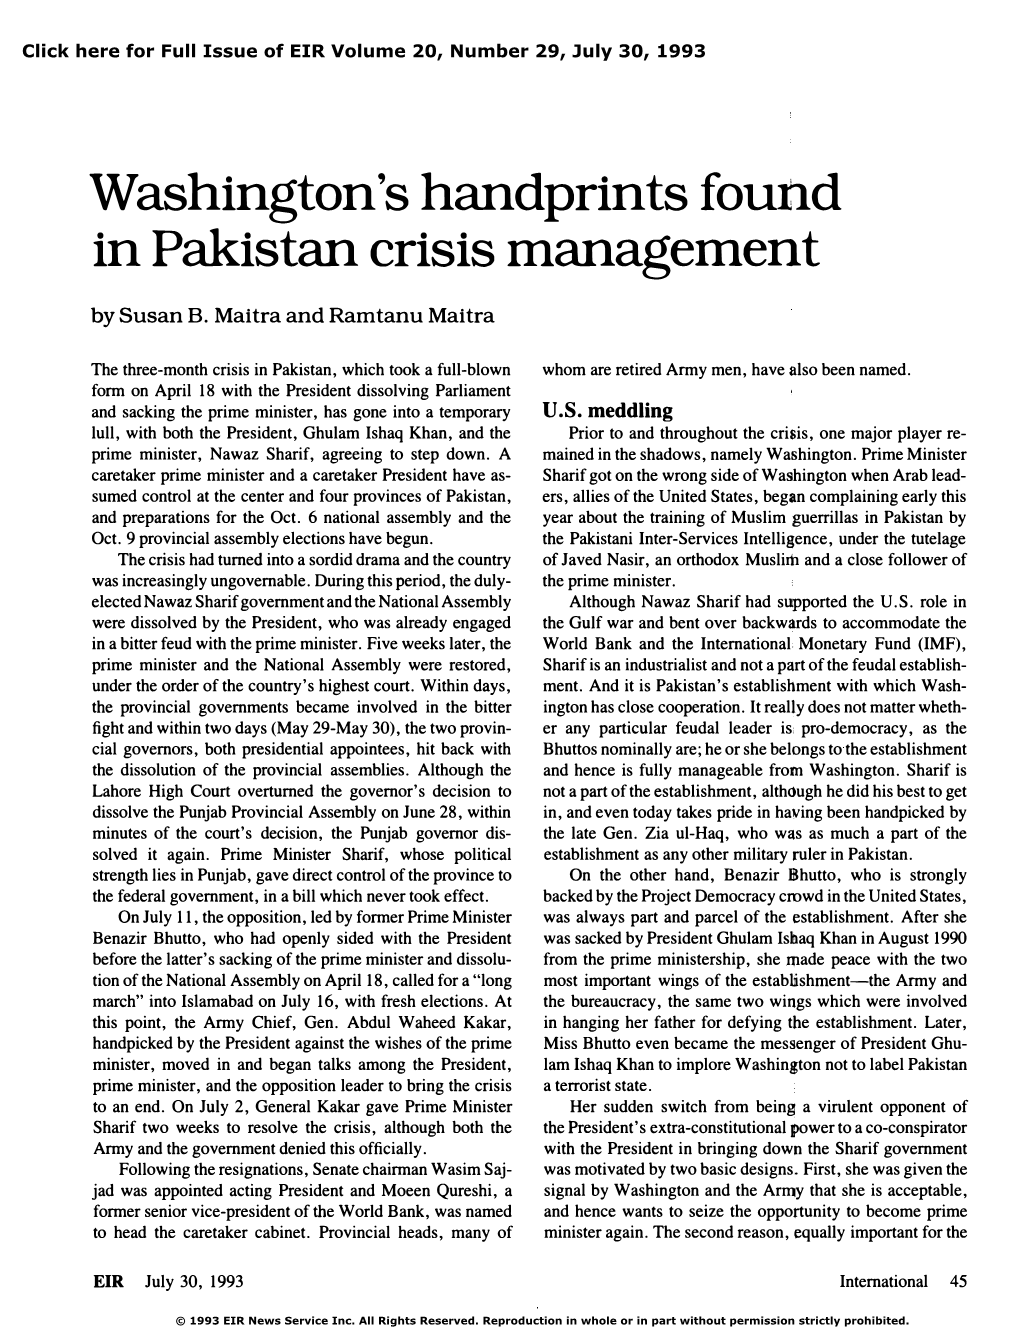 Washington's Handprints Found in Pakistan Crisis Management